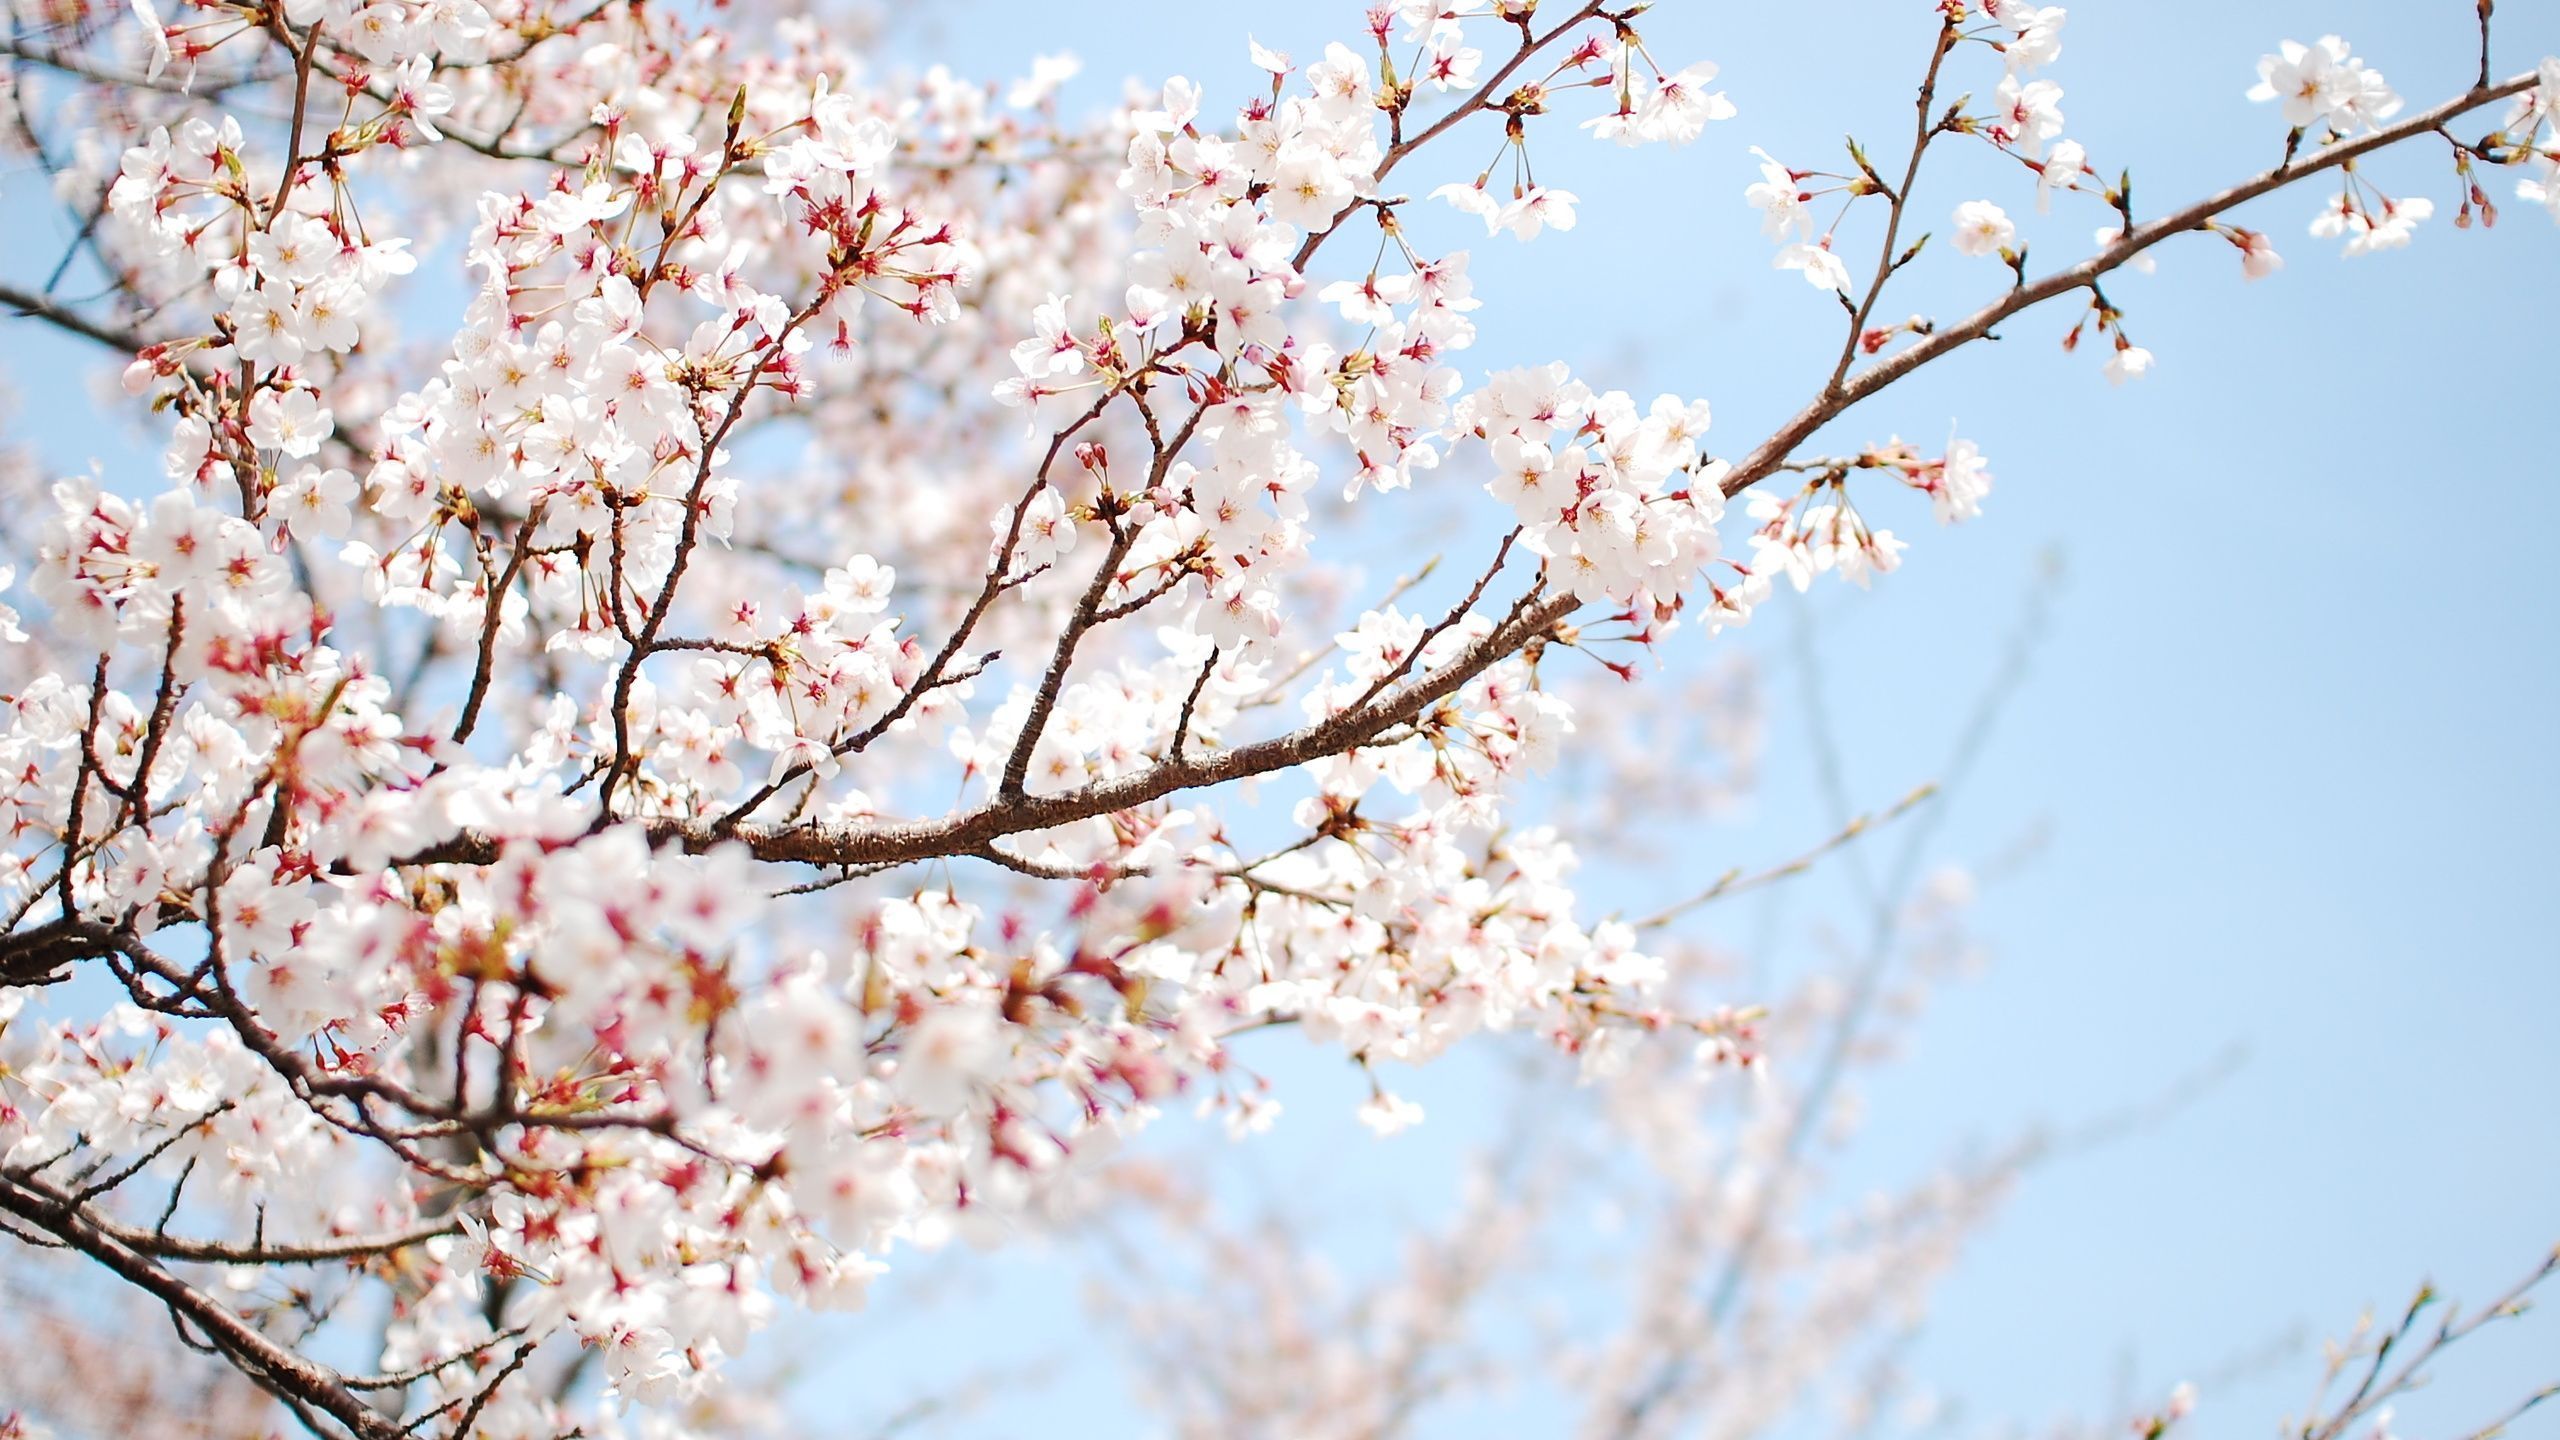 Cherry Blossom Tree Branch - wallpaper.